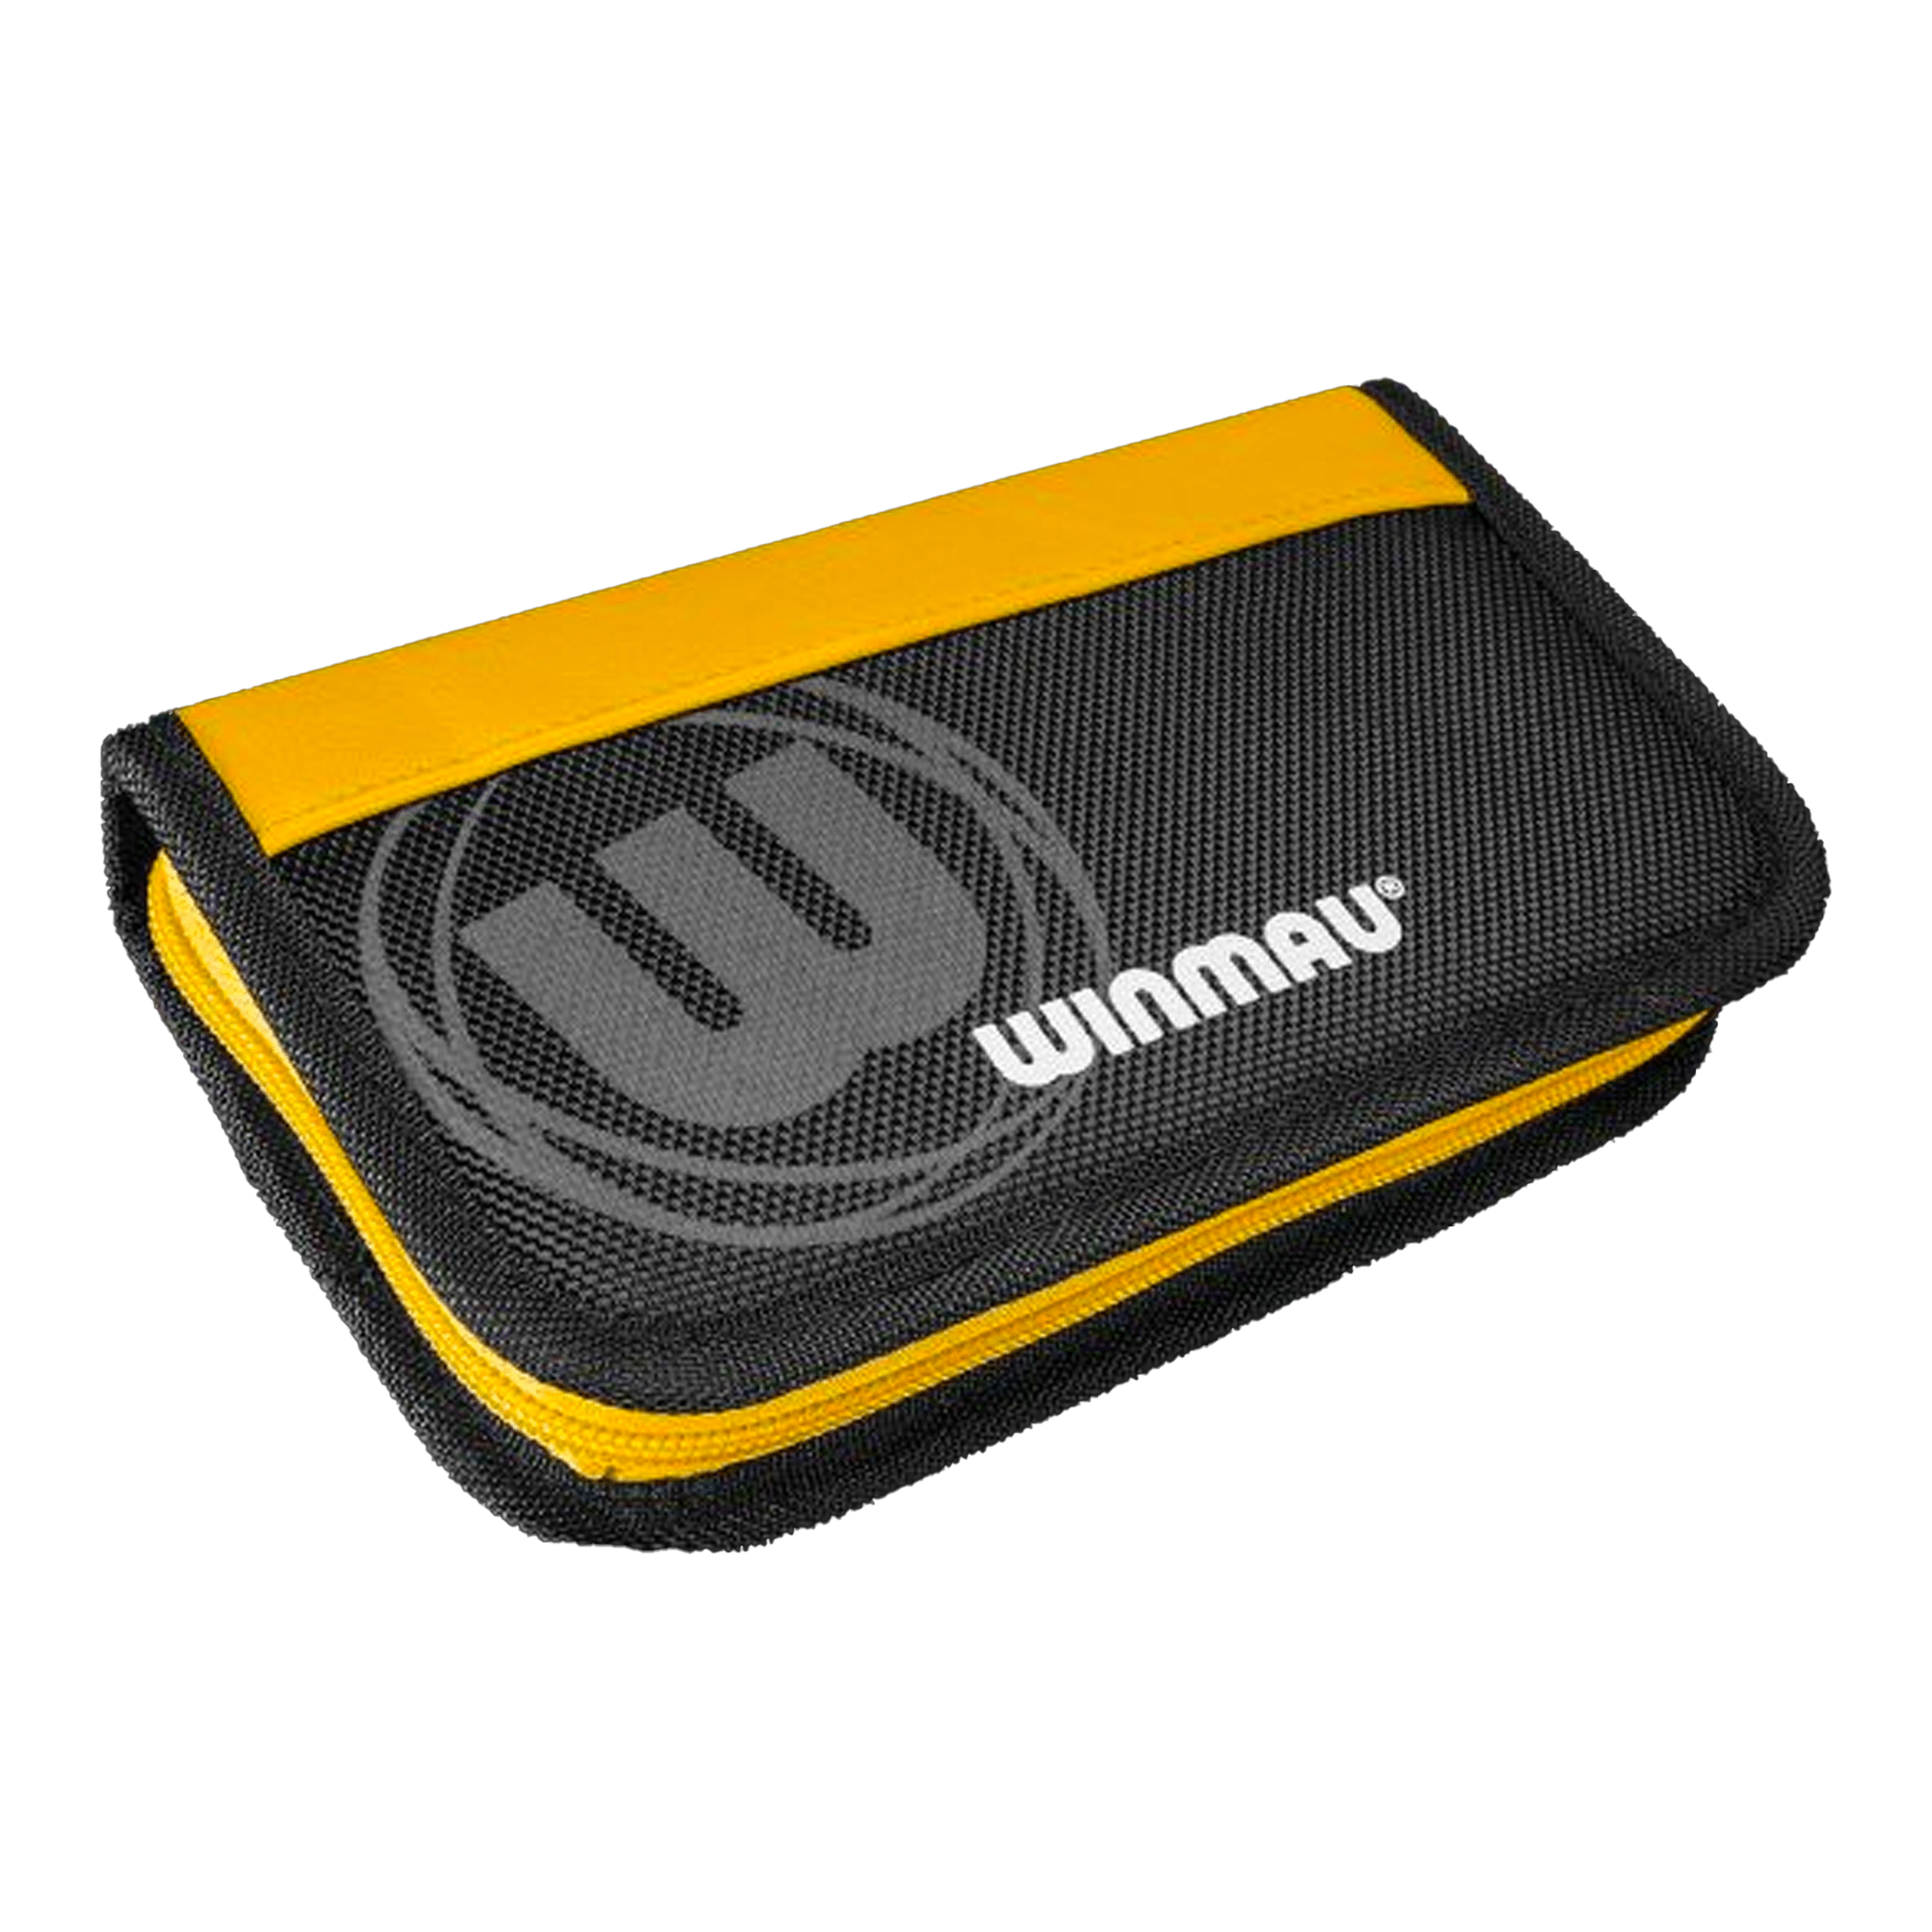 Winmau Urban Pro Darts Case Yellow Cases